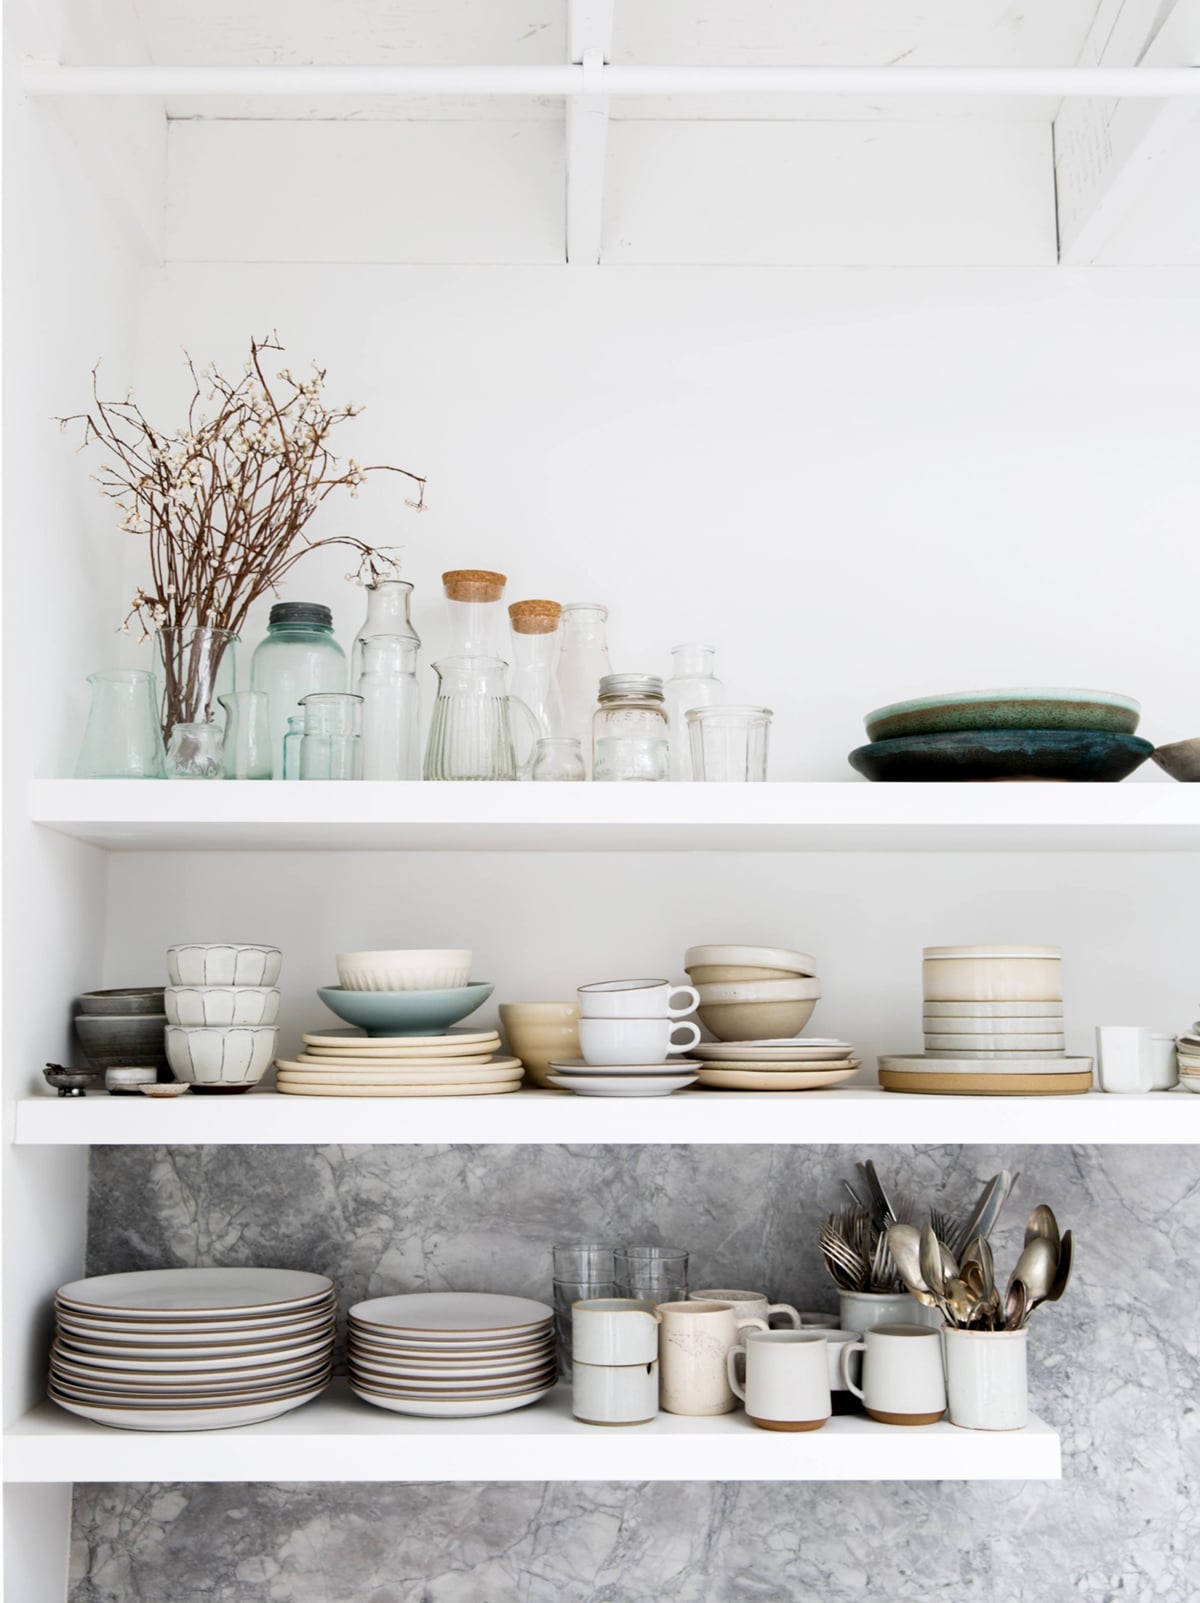 perfect open shelving with a marble backsplash | backyard photo studio kitchen tour on coco kelley